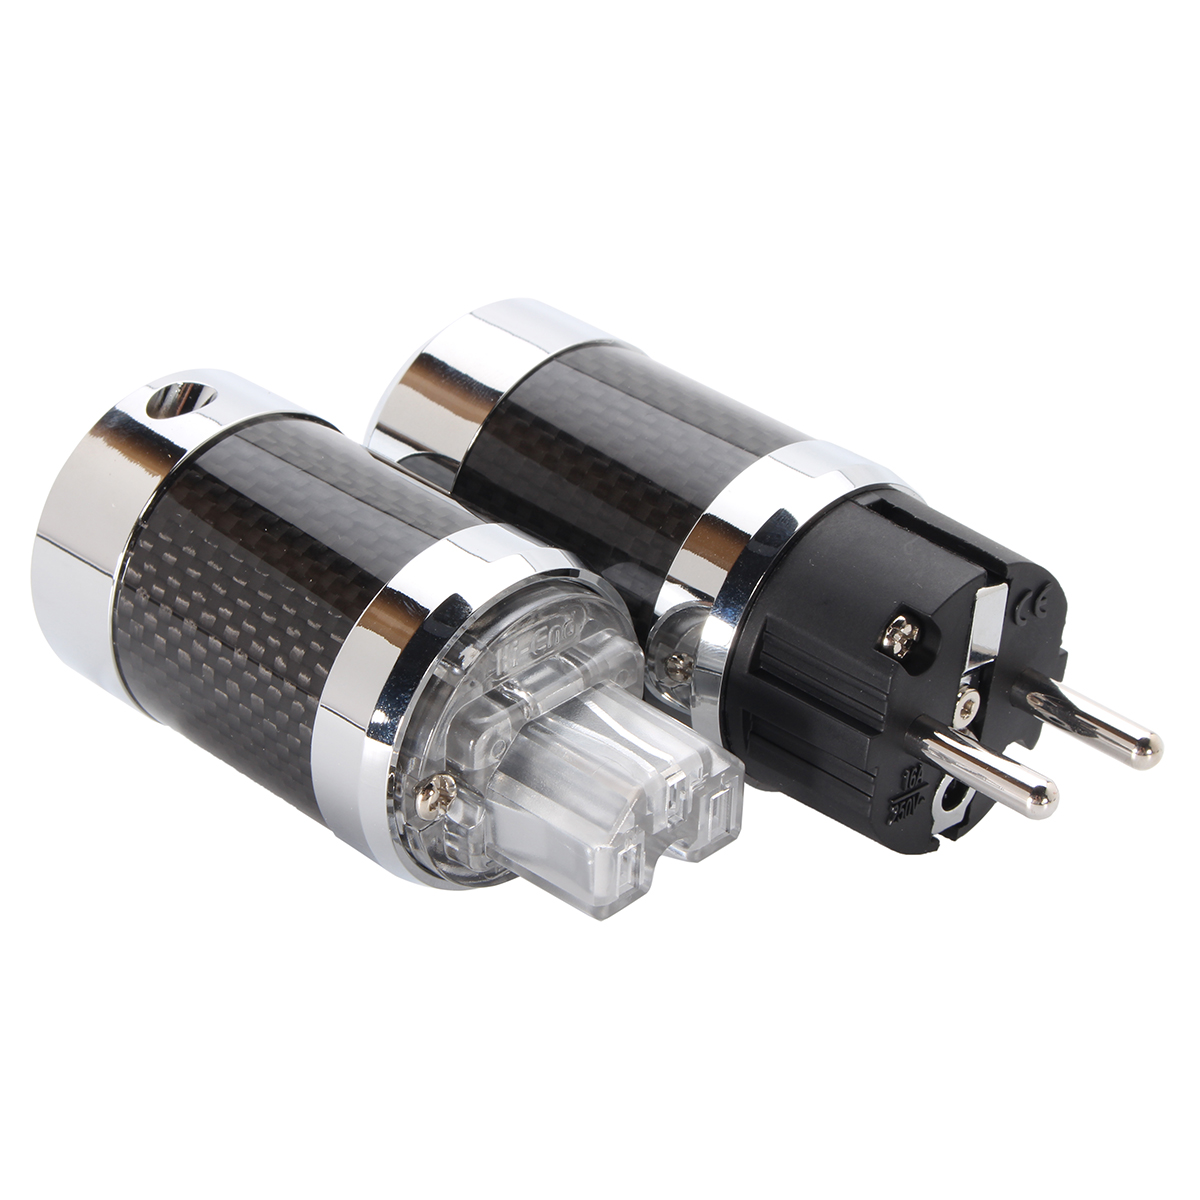 Vanguard-Carbon-Fiber-Rhodium-Plated-IEC-Three-pole-DC-Power-Plug-1360895-2